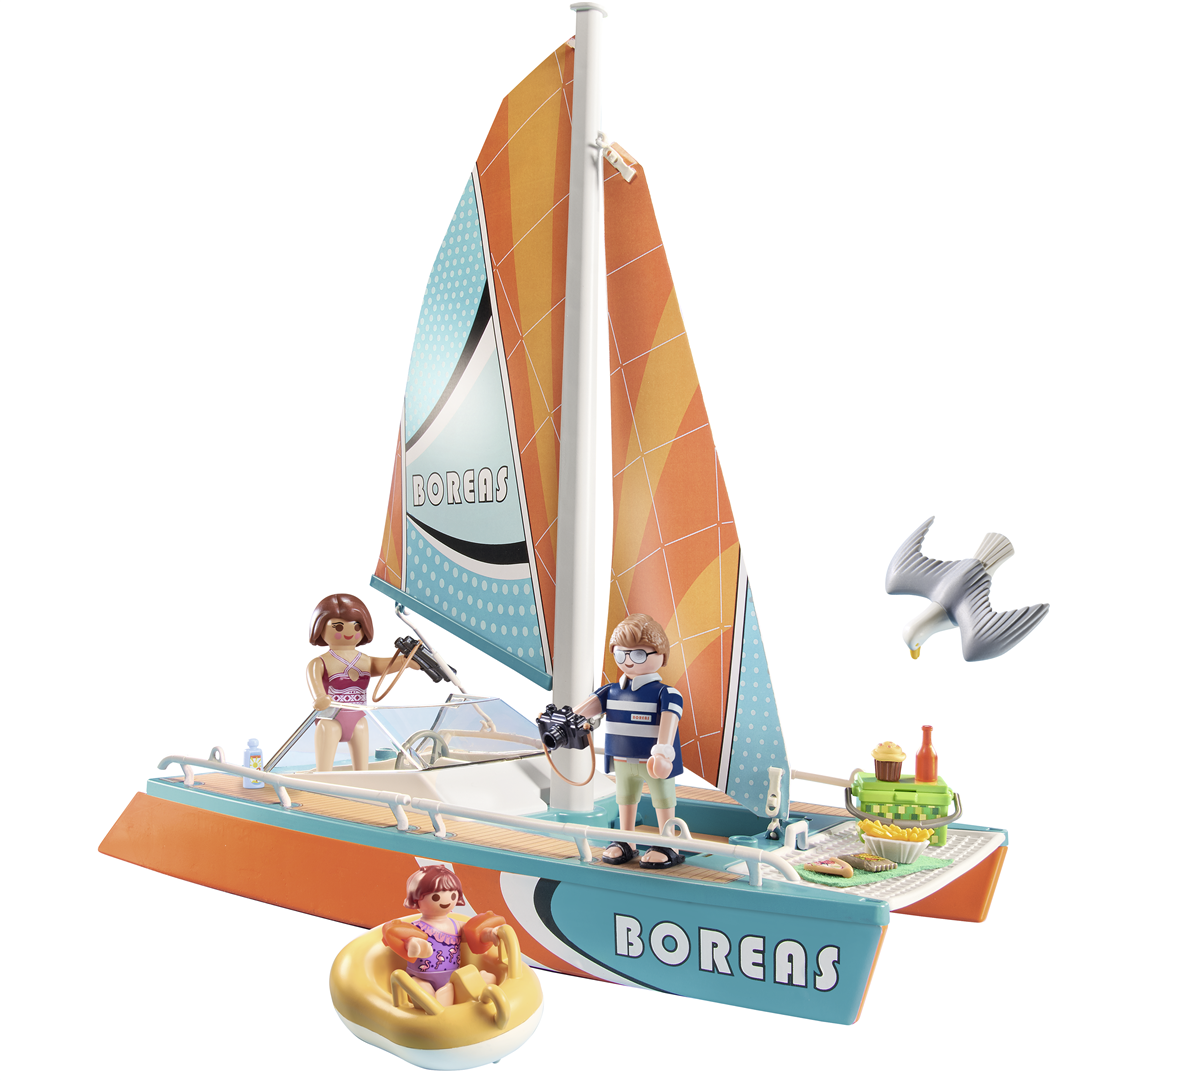 Playmobil family fun 71043 promo pack catamarano per bambini dai 4 anni in su - Playmobil